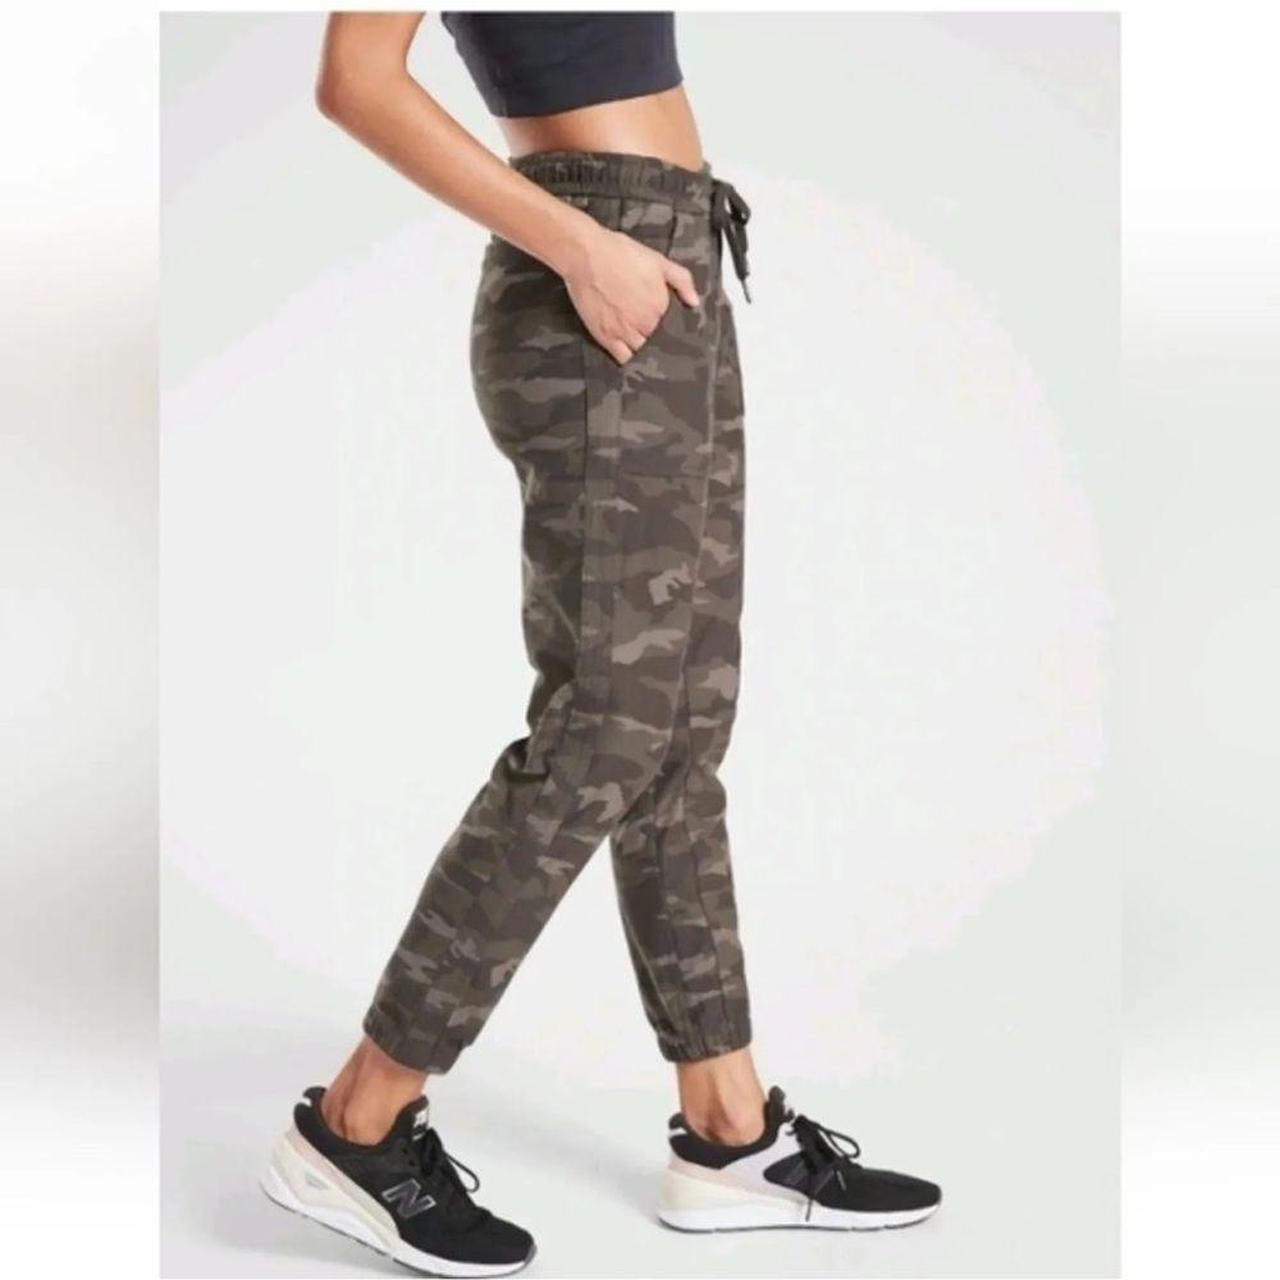 Athleta Camouflage Cargo Pants for Women